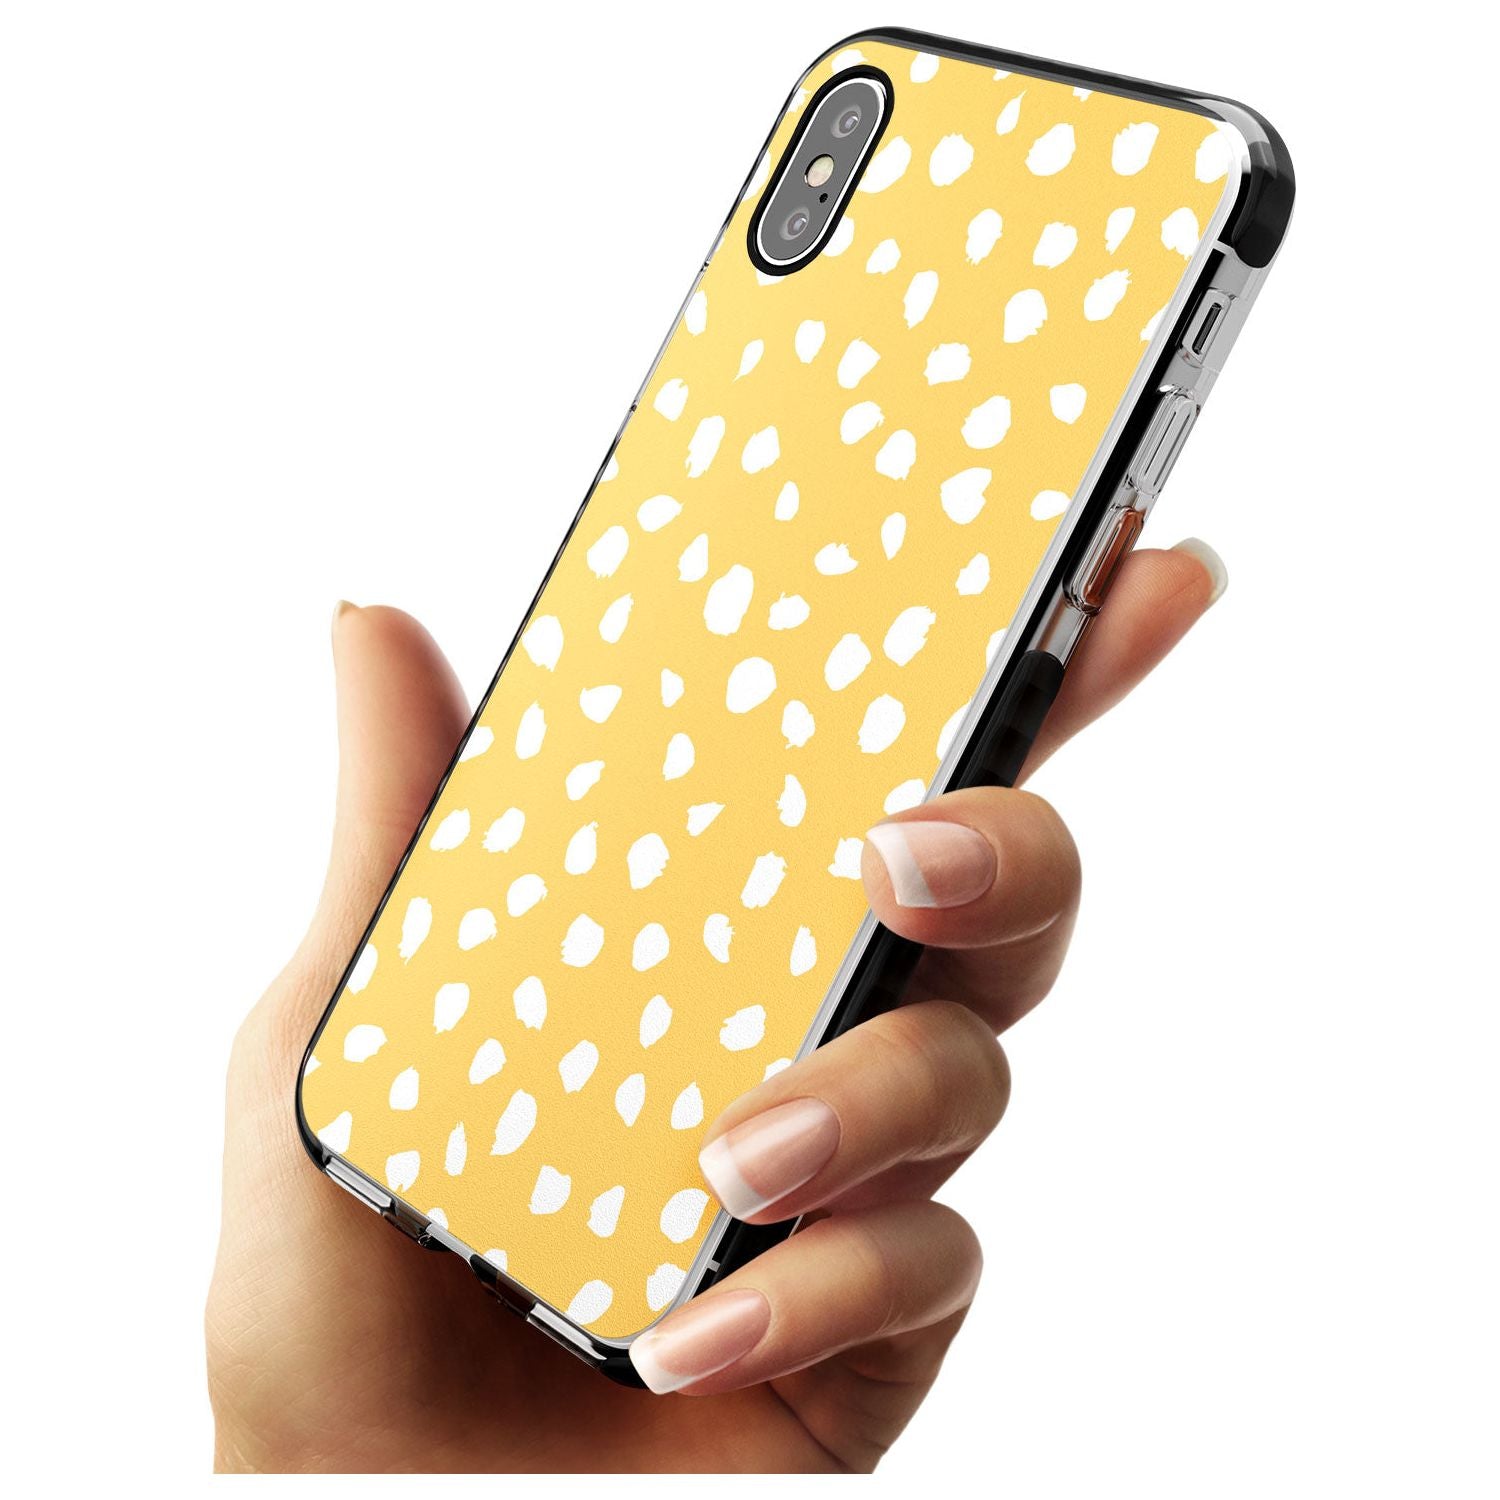 White on Yellow Dalmatian Polka Dot Spots Black Impact Phone Case for iPhone X XS Max XR